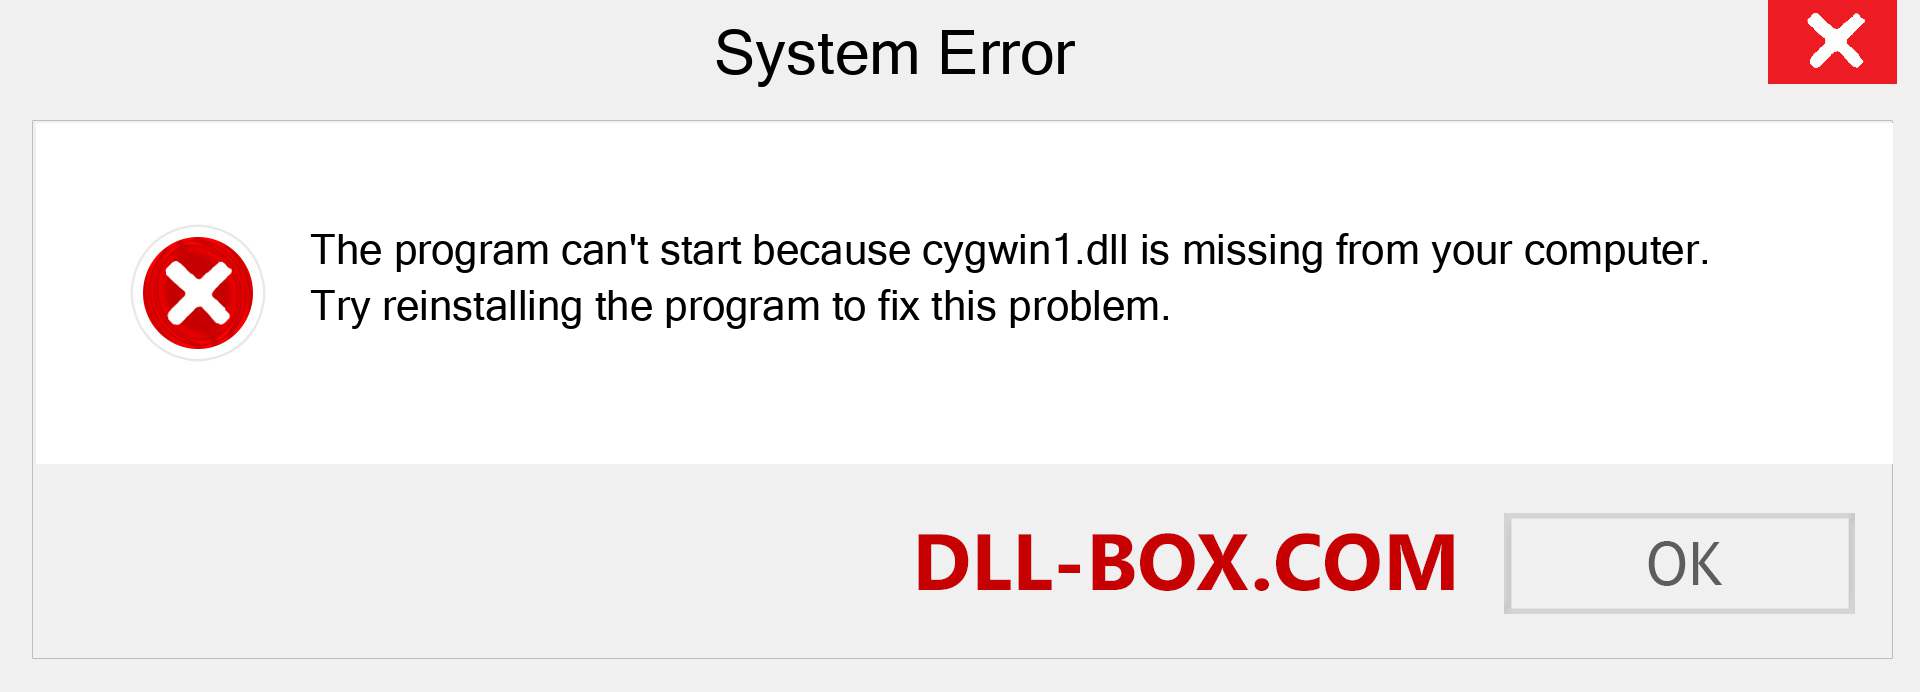 cygwin1.dll을 찾을 수 없기 때문에 시작하지 못했습니다.